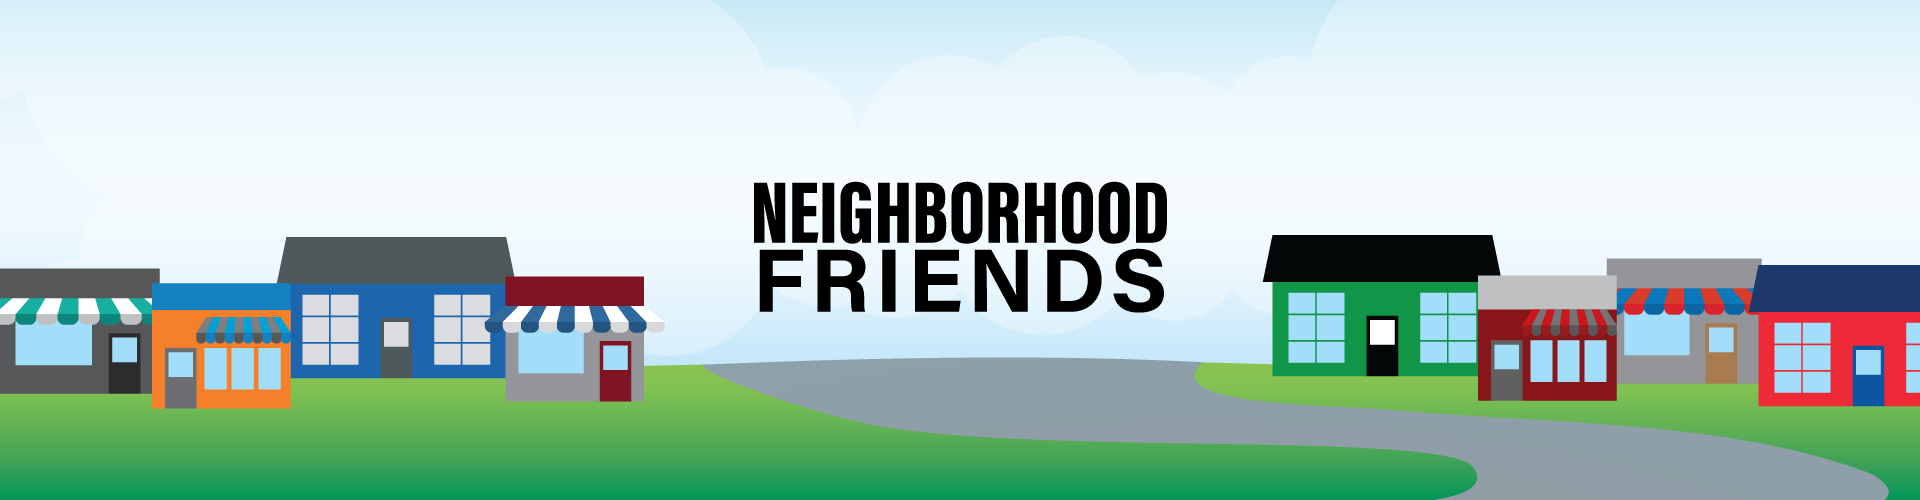 Neighborhood Friends Header